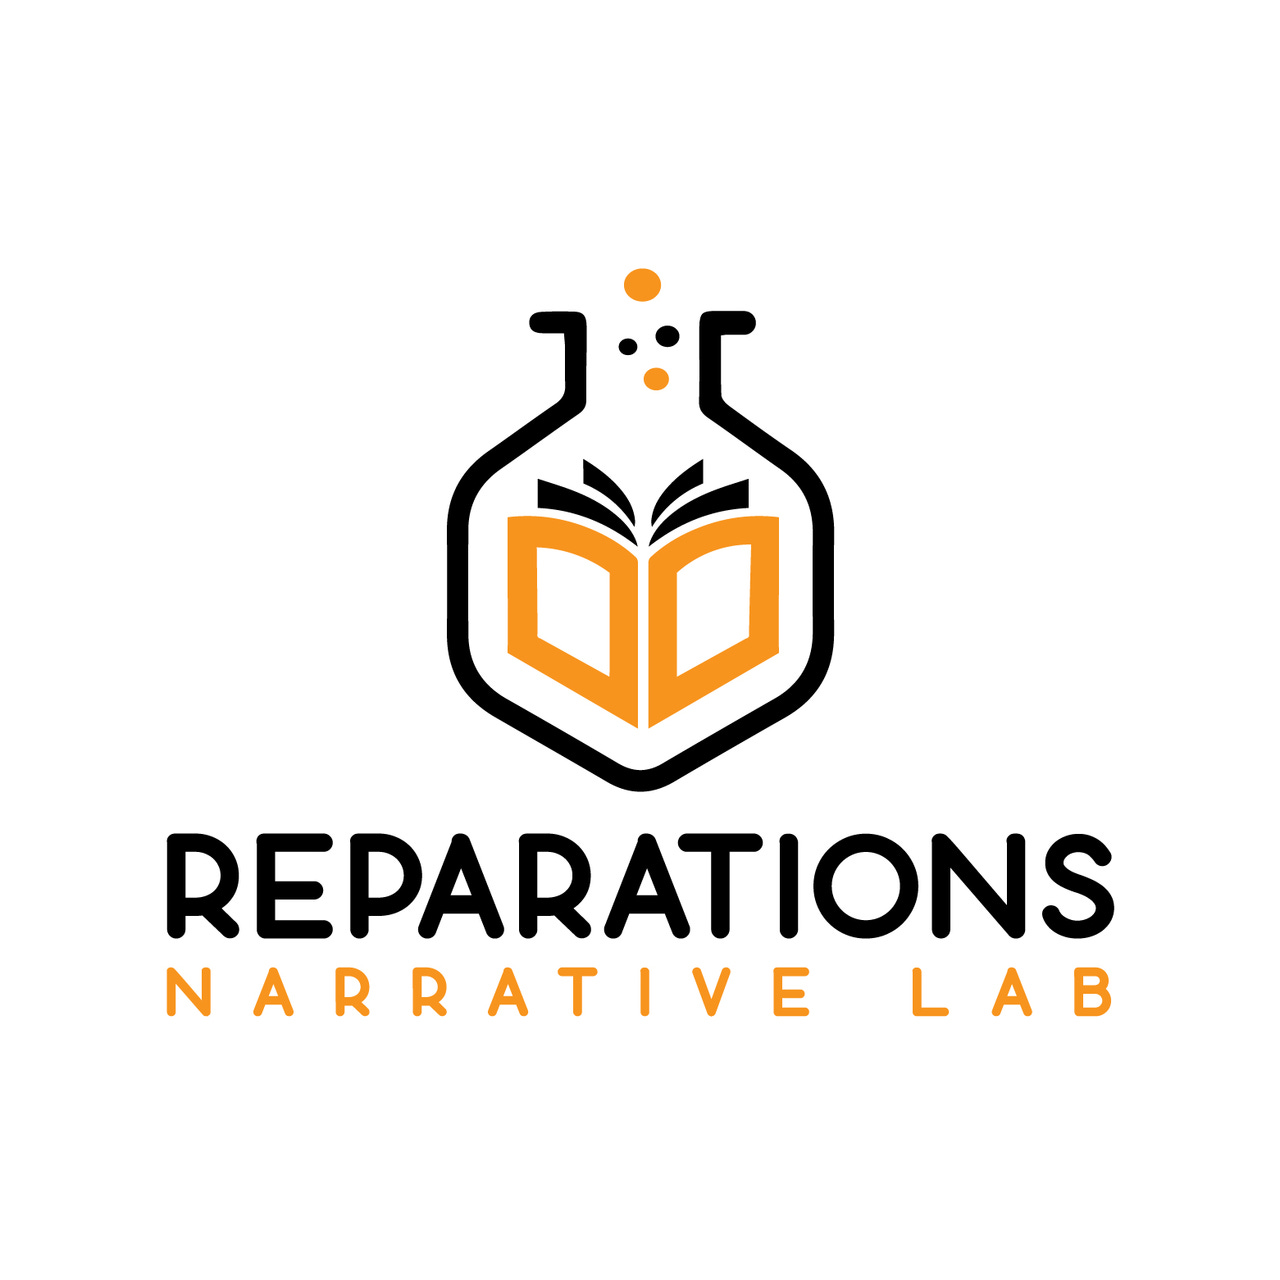 Reparations Daily (ish)